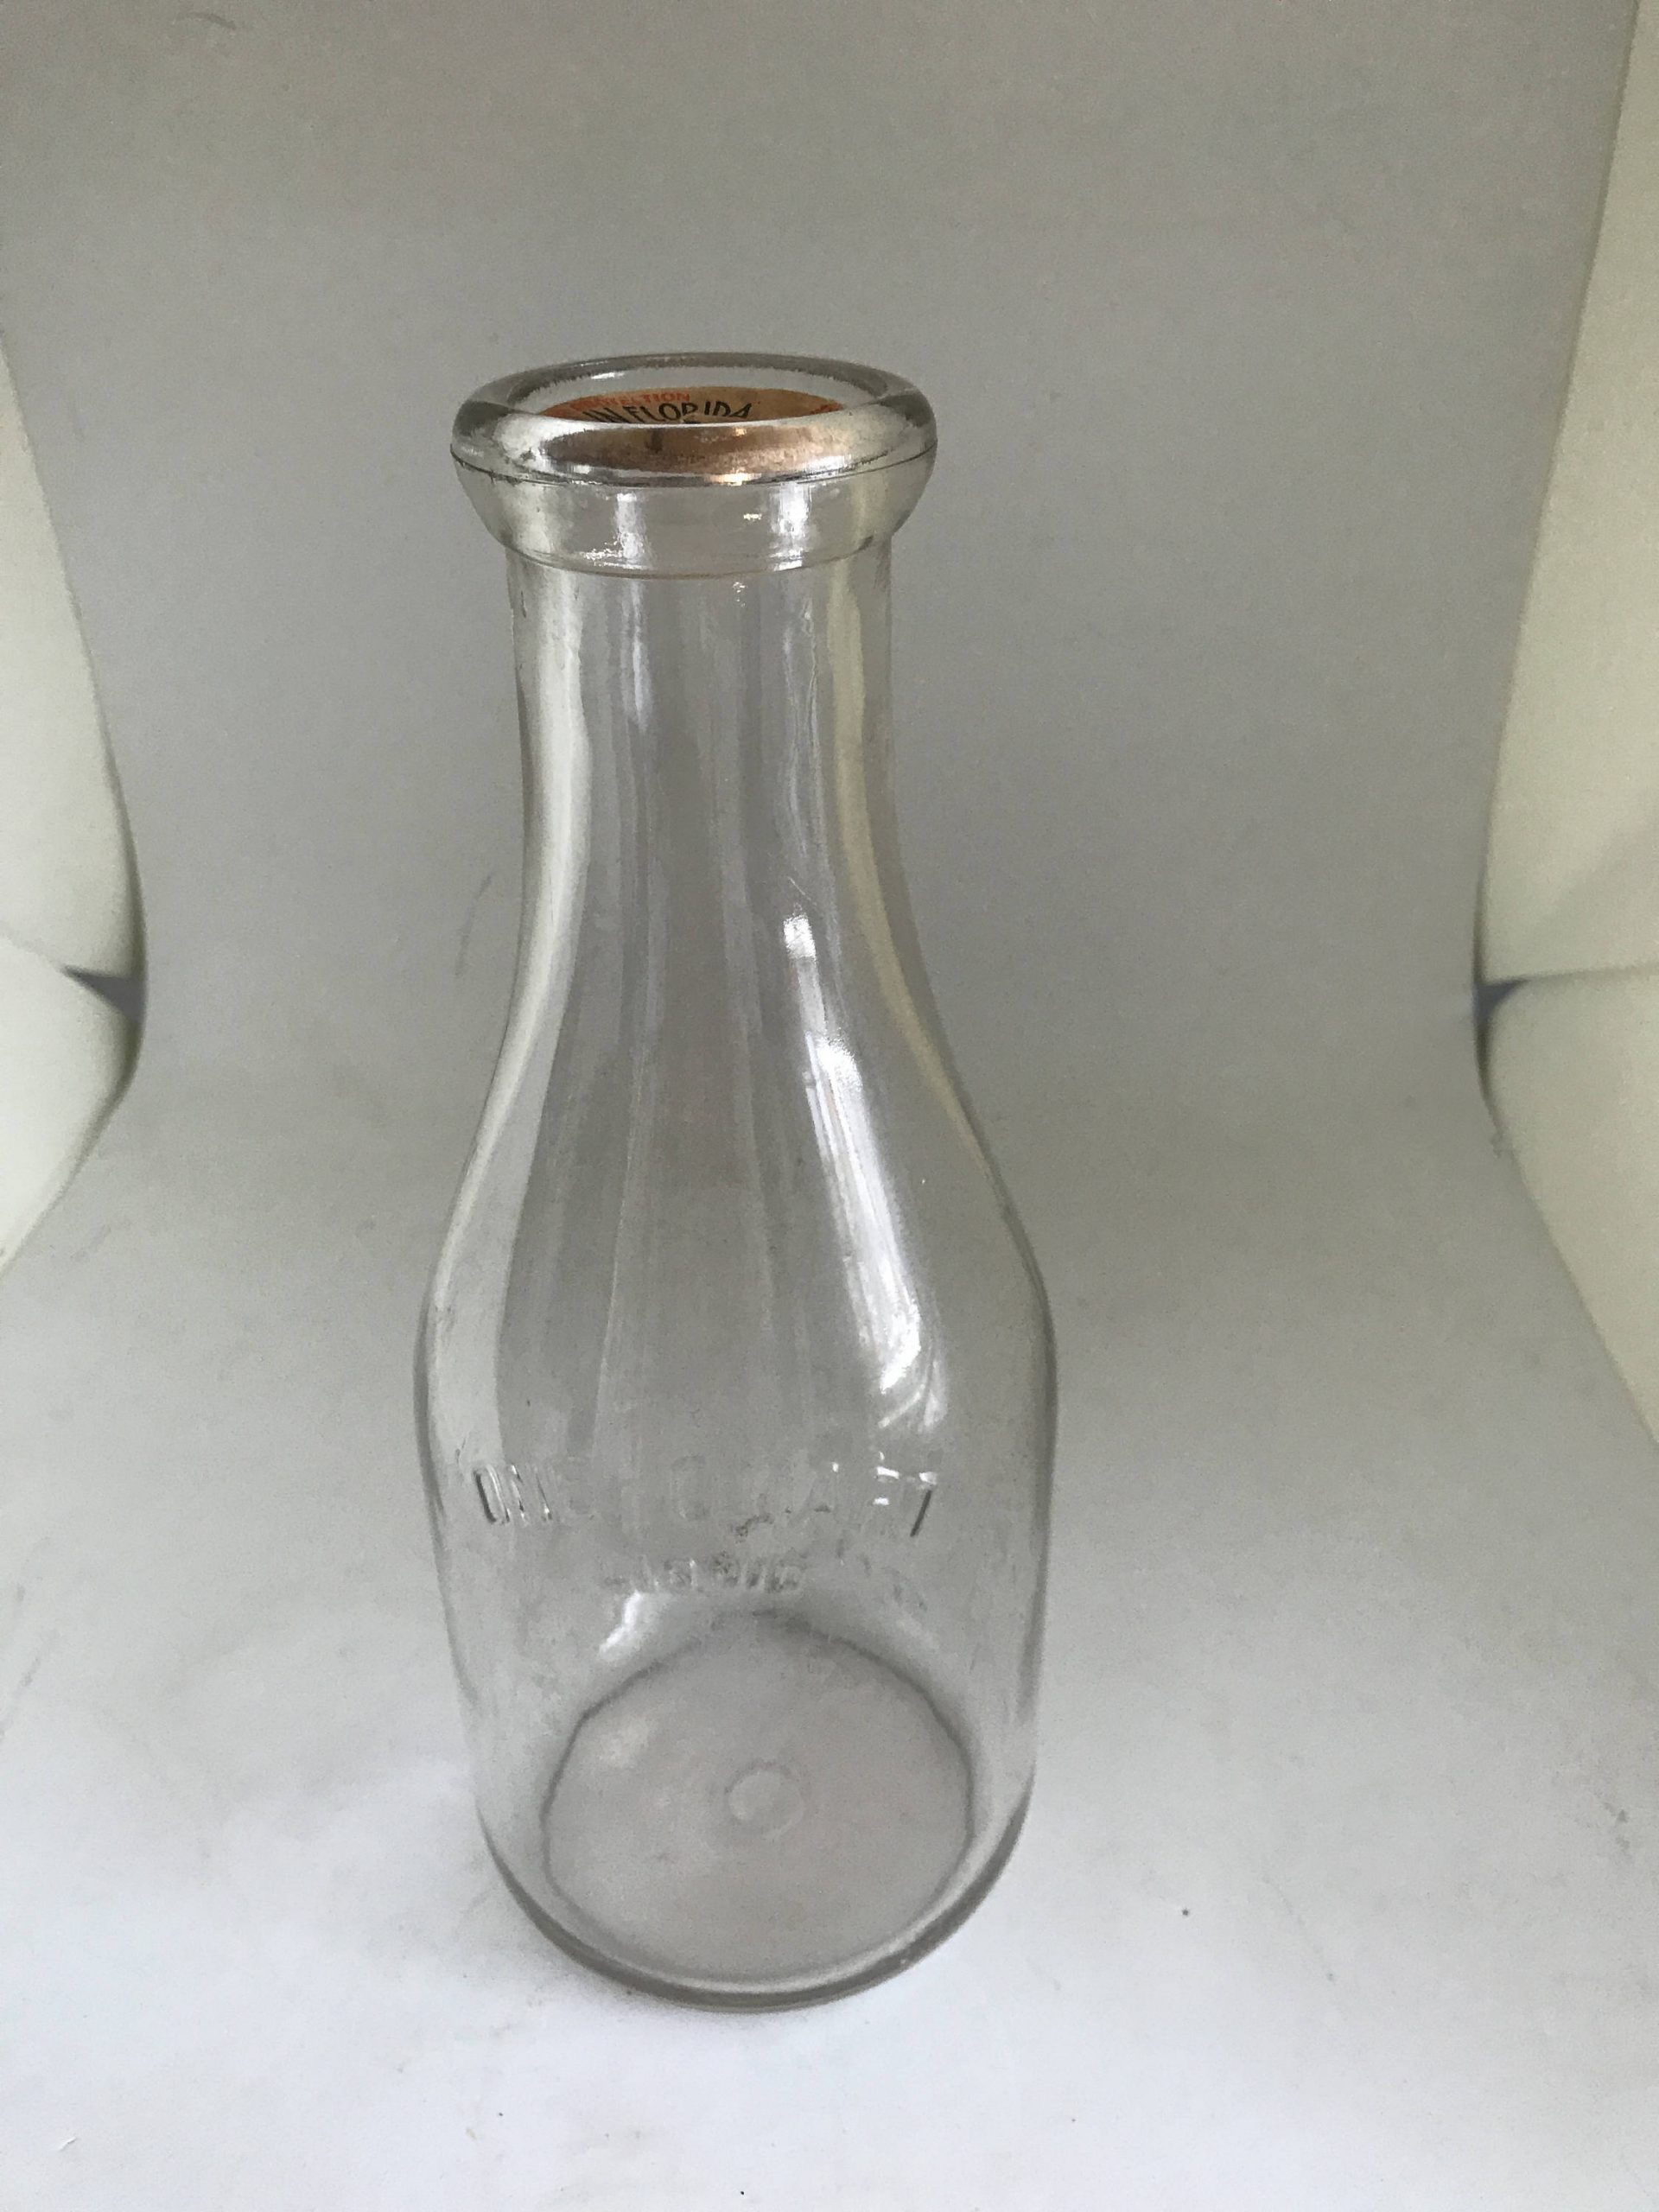 1 Quart Glass Milk Bottle With Lid